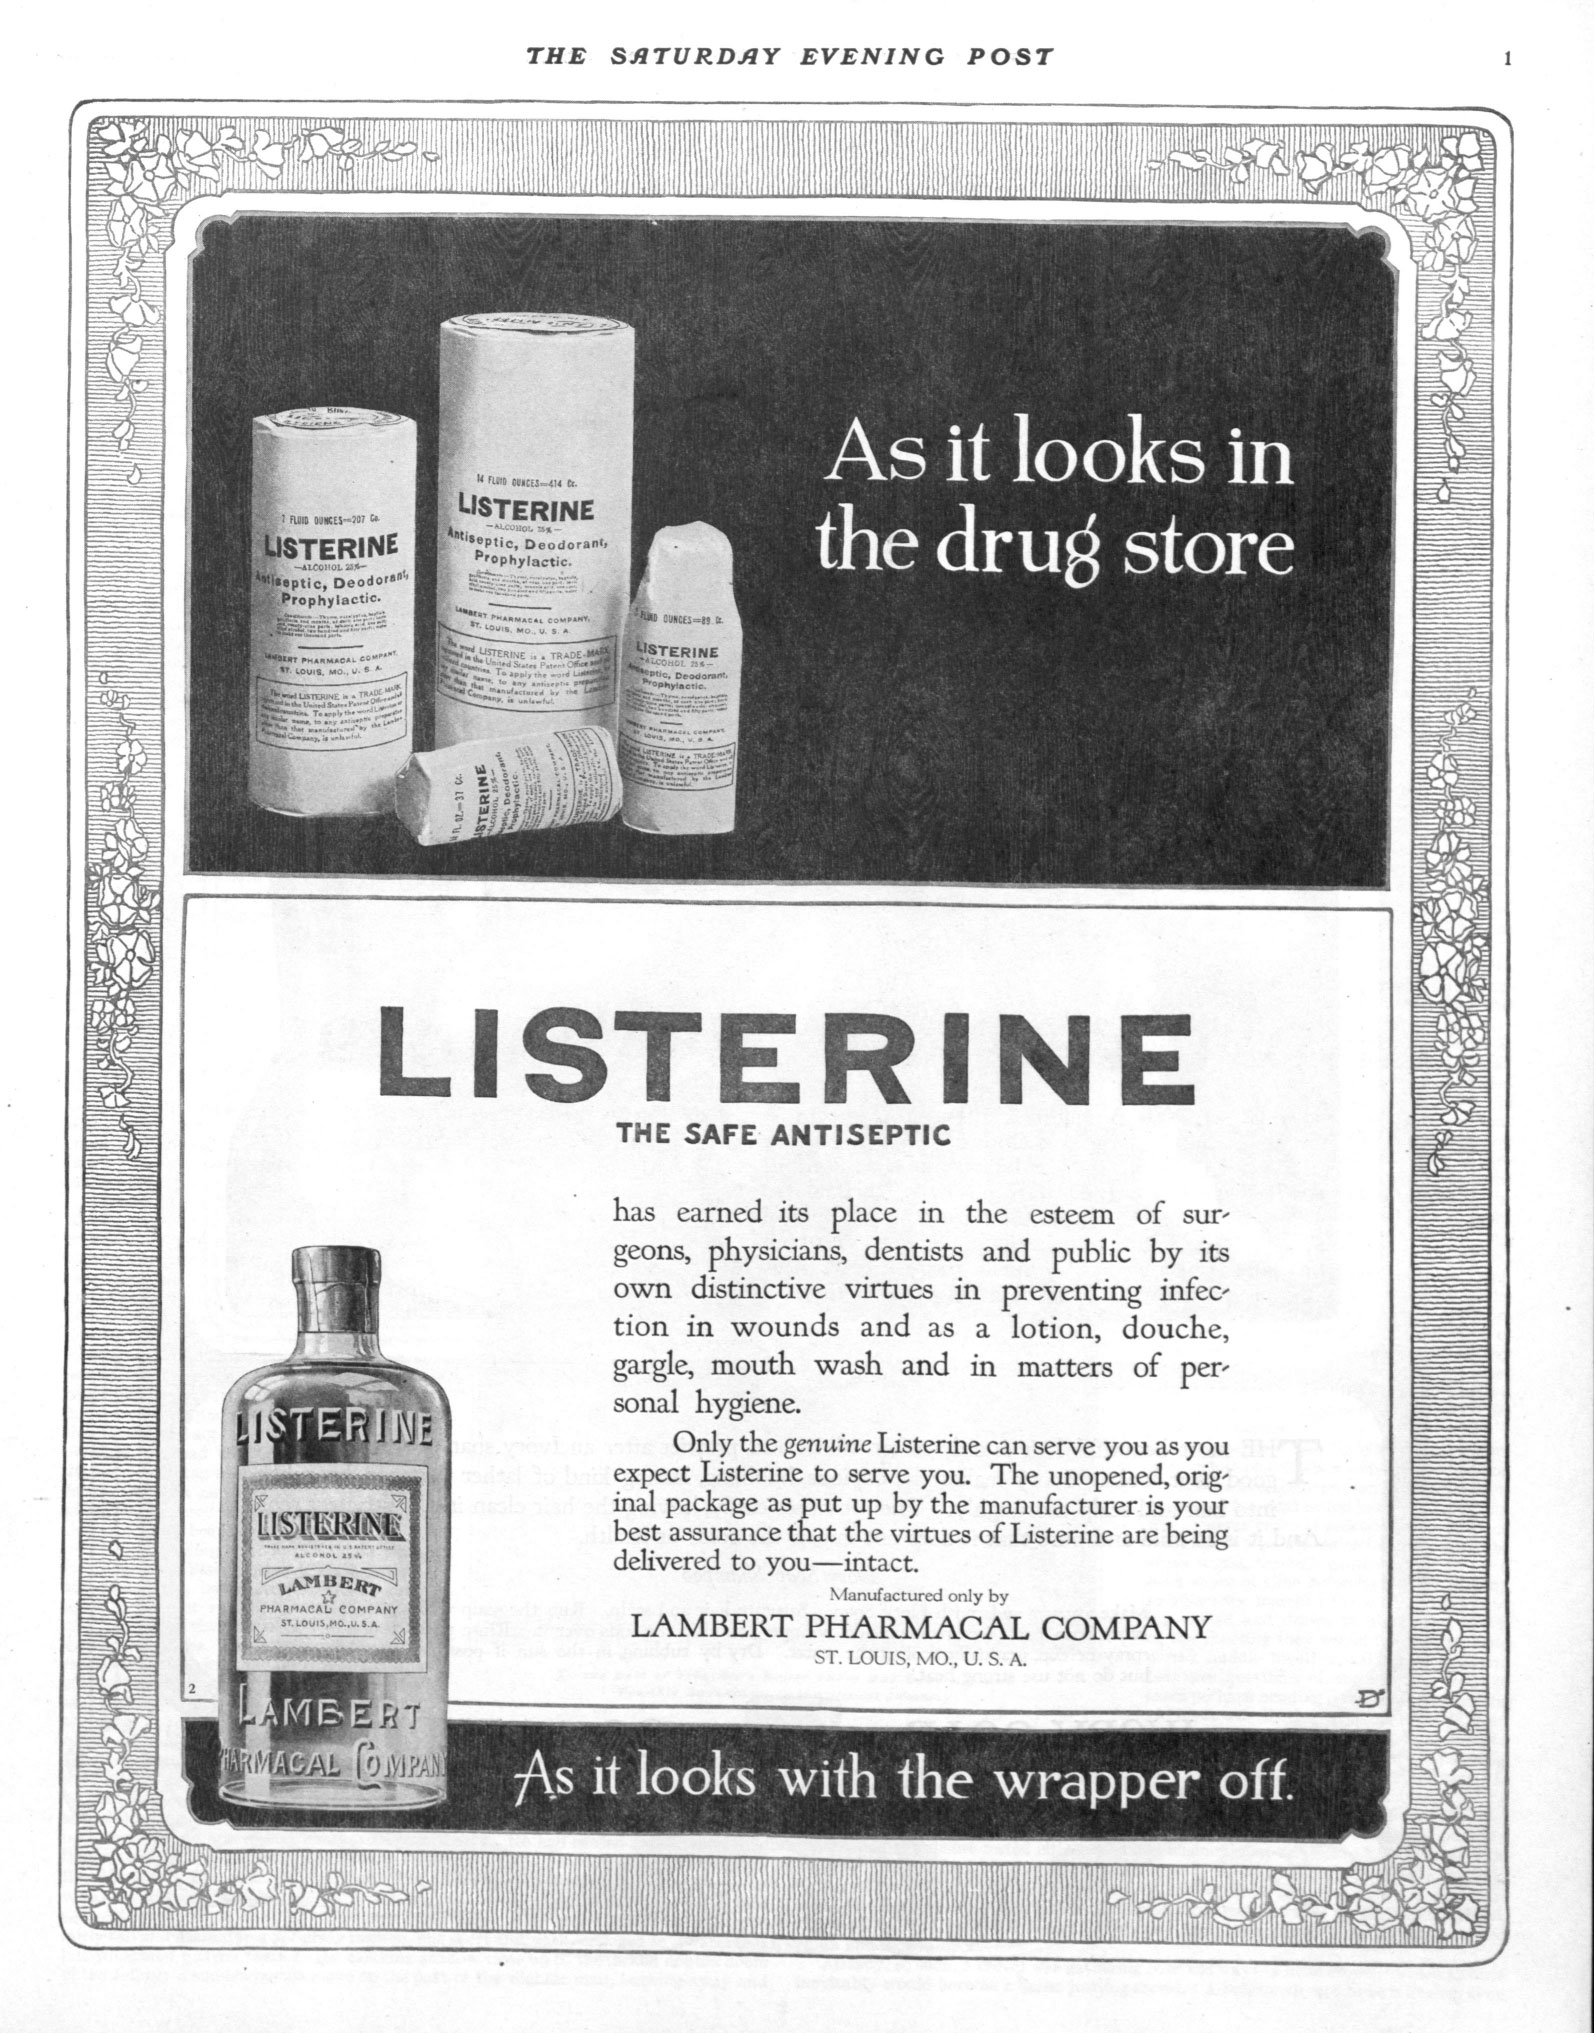 Vintage advertisement